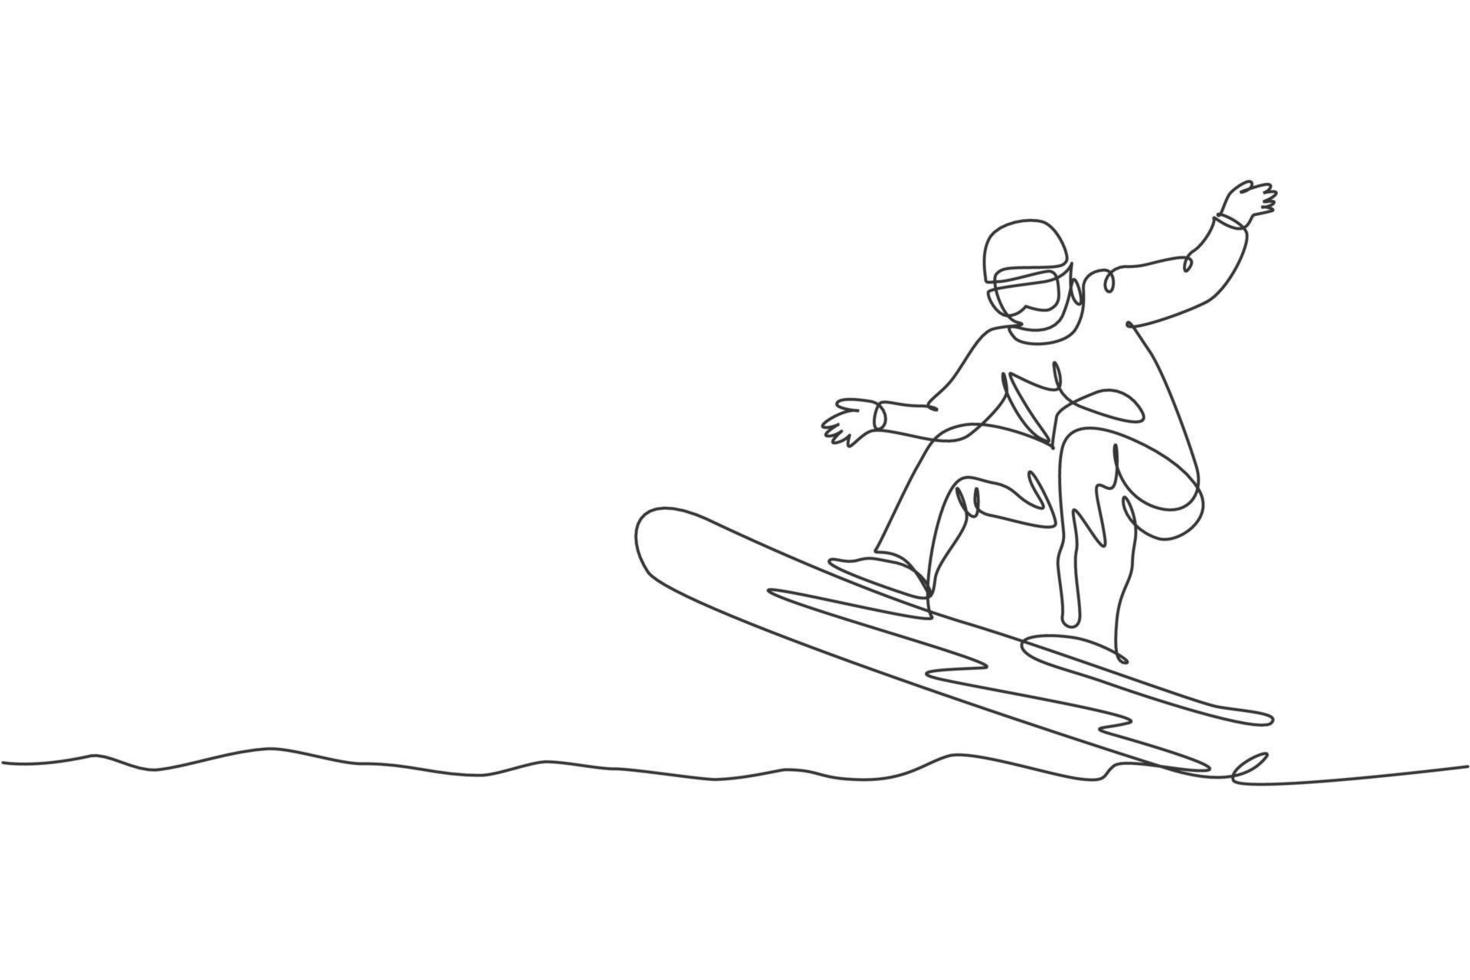 enda kontinuerlig linje ritning ung sportig snowboardåkare man som rider snowboard snabbt på berget. extremsport utomhus. vinter semester koncept. trendig enradig design grafisk vektorillustration vektor